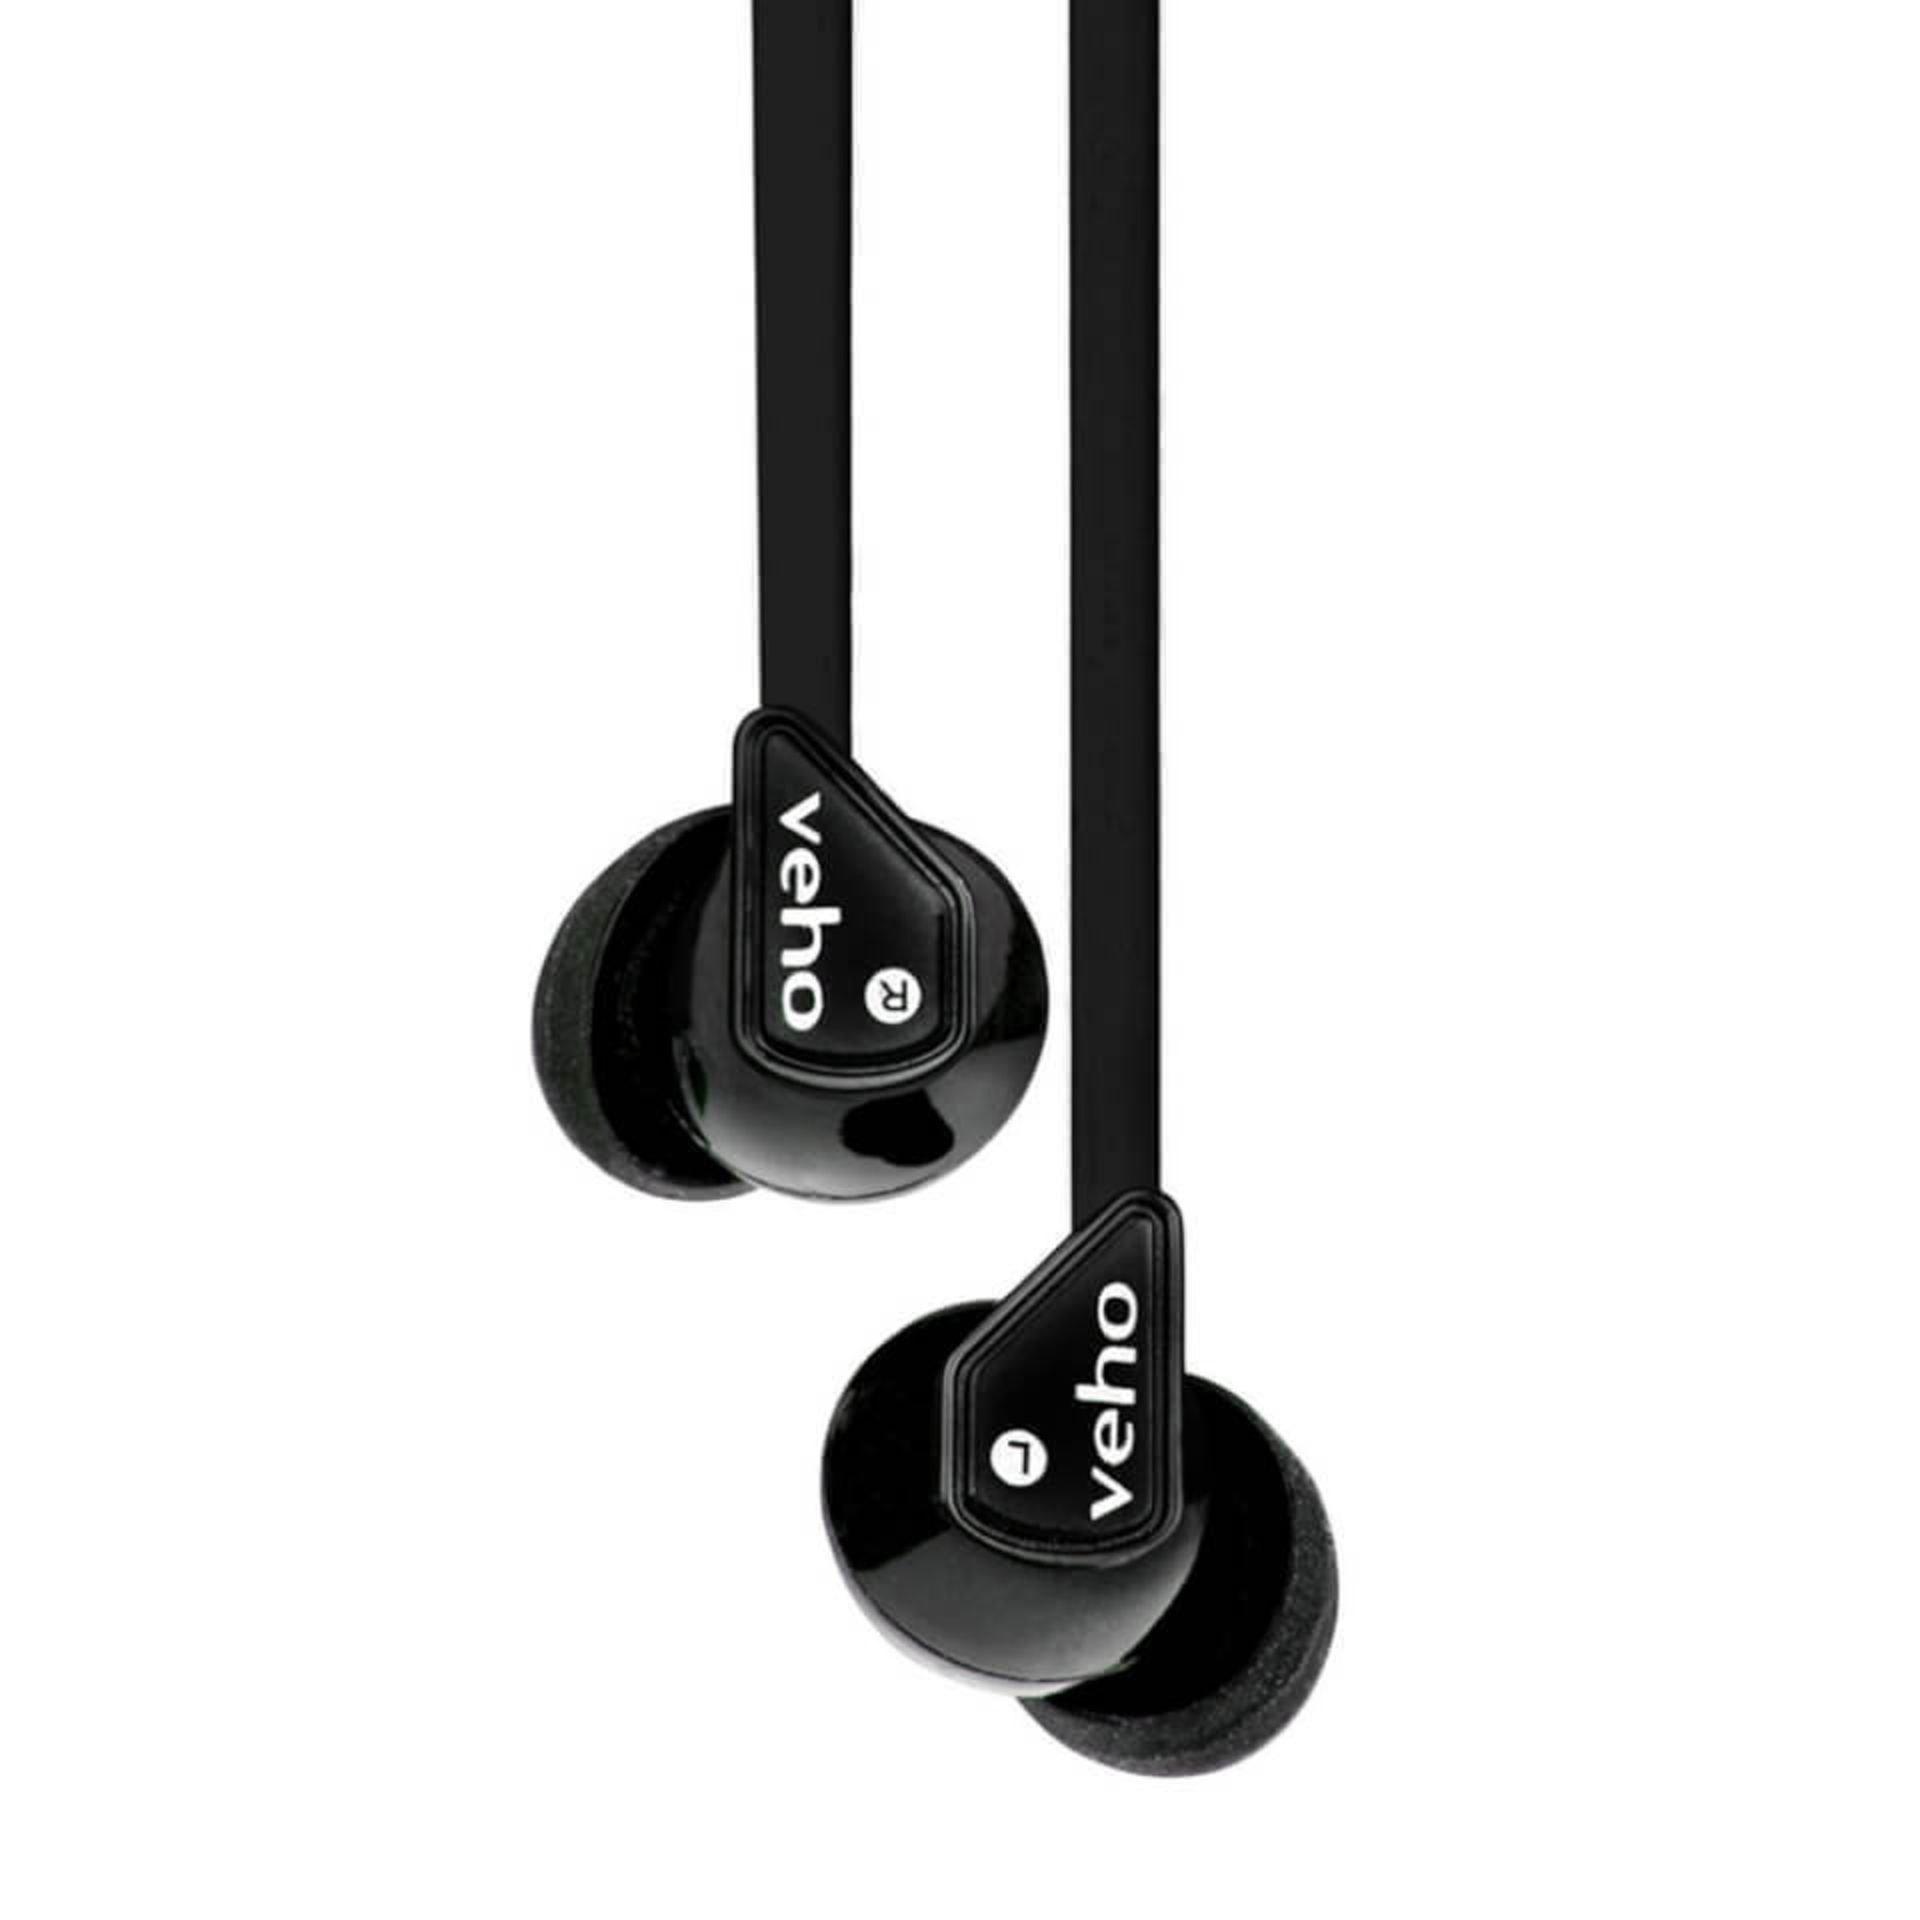 V Brand New Veho Z-1 Noise Isolating Stereo Earbuds - Black - Online Price £19.95 X 2 YOUR BID PRICE